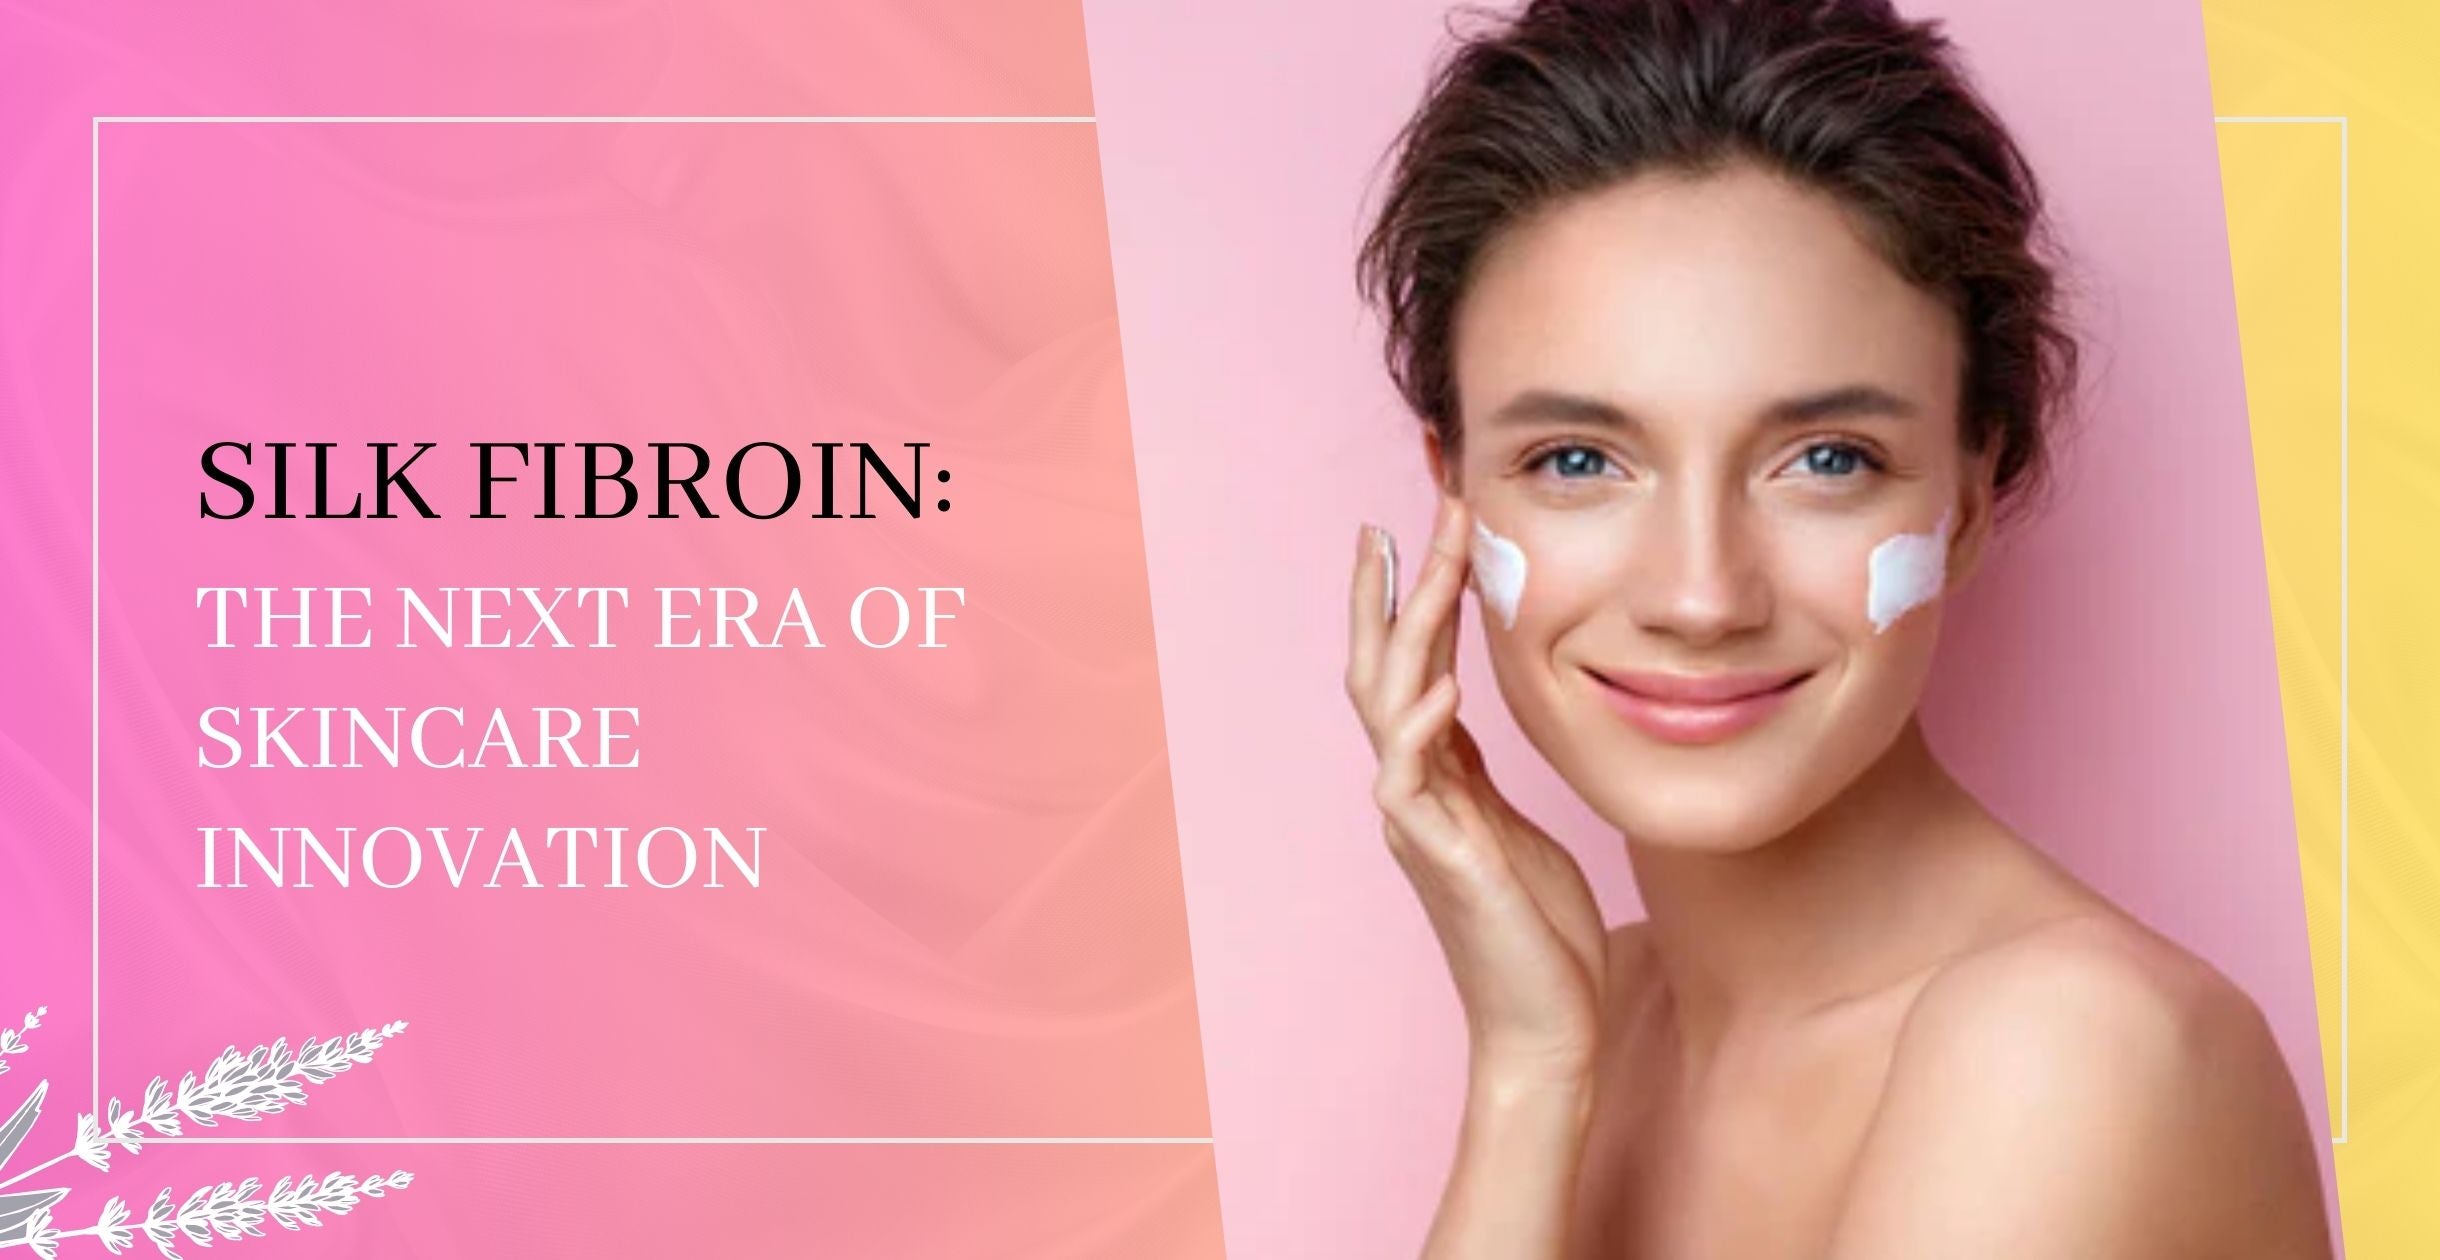 Silk Fibroin: The Next Era of Skincare Innovation